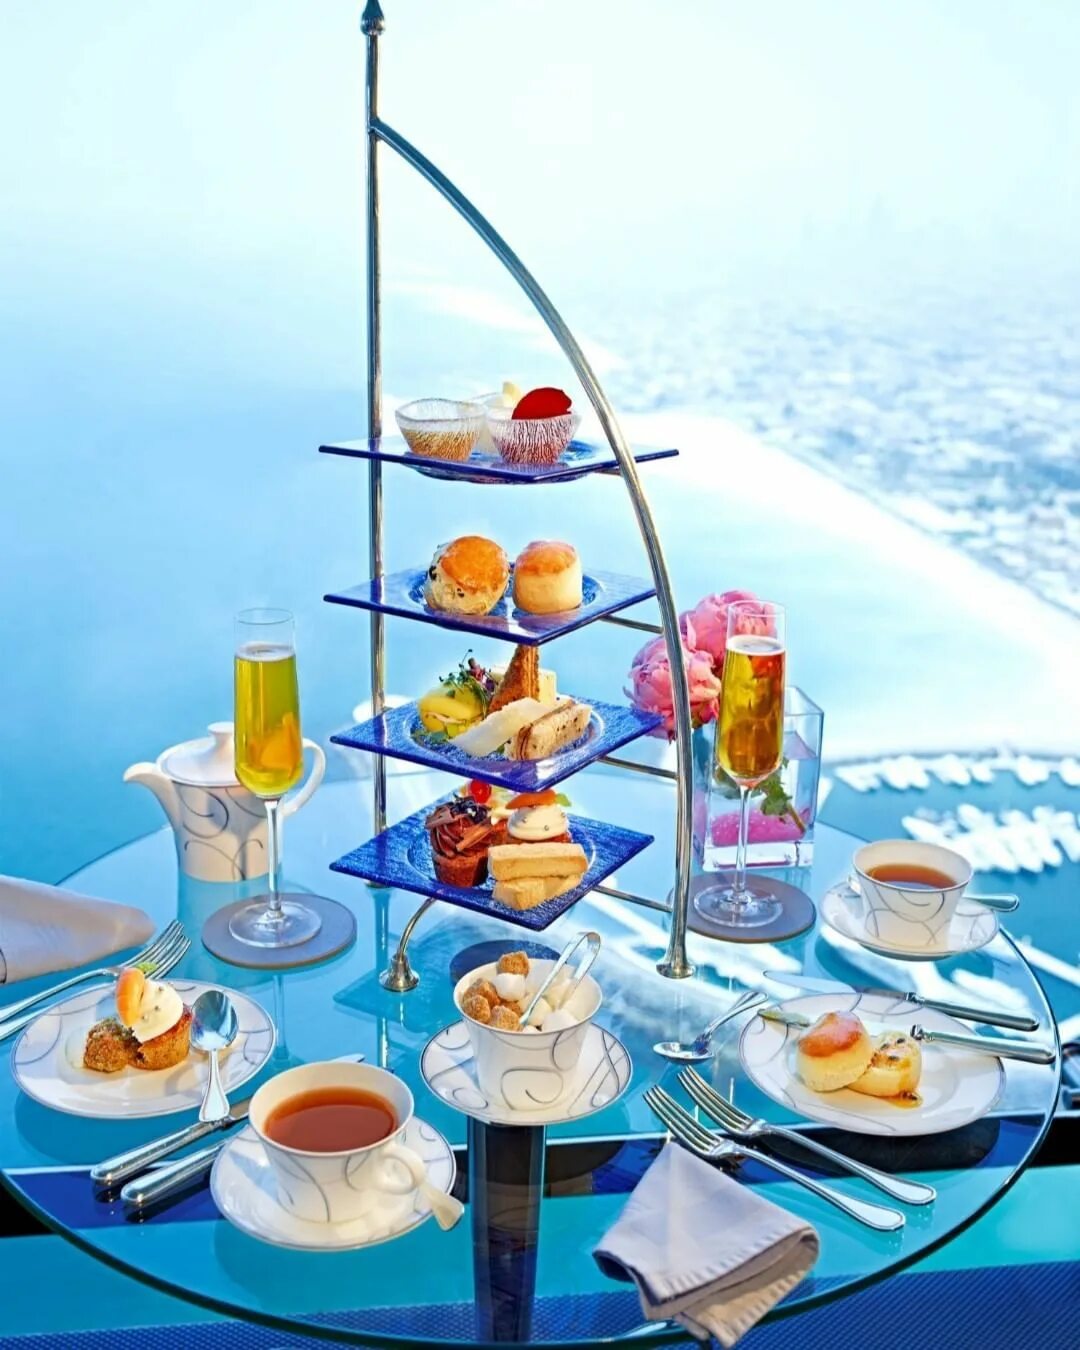 Дубай Бурдж Аль араб ресторан. Завтрак в Эмиратах. Завтрак в отеле. Завтрак в дубае